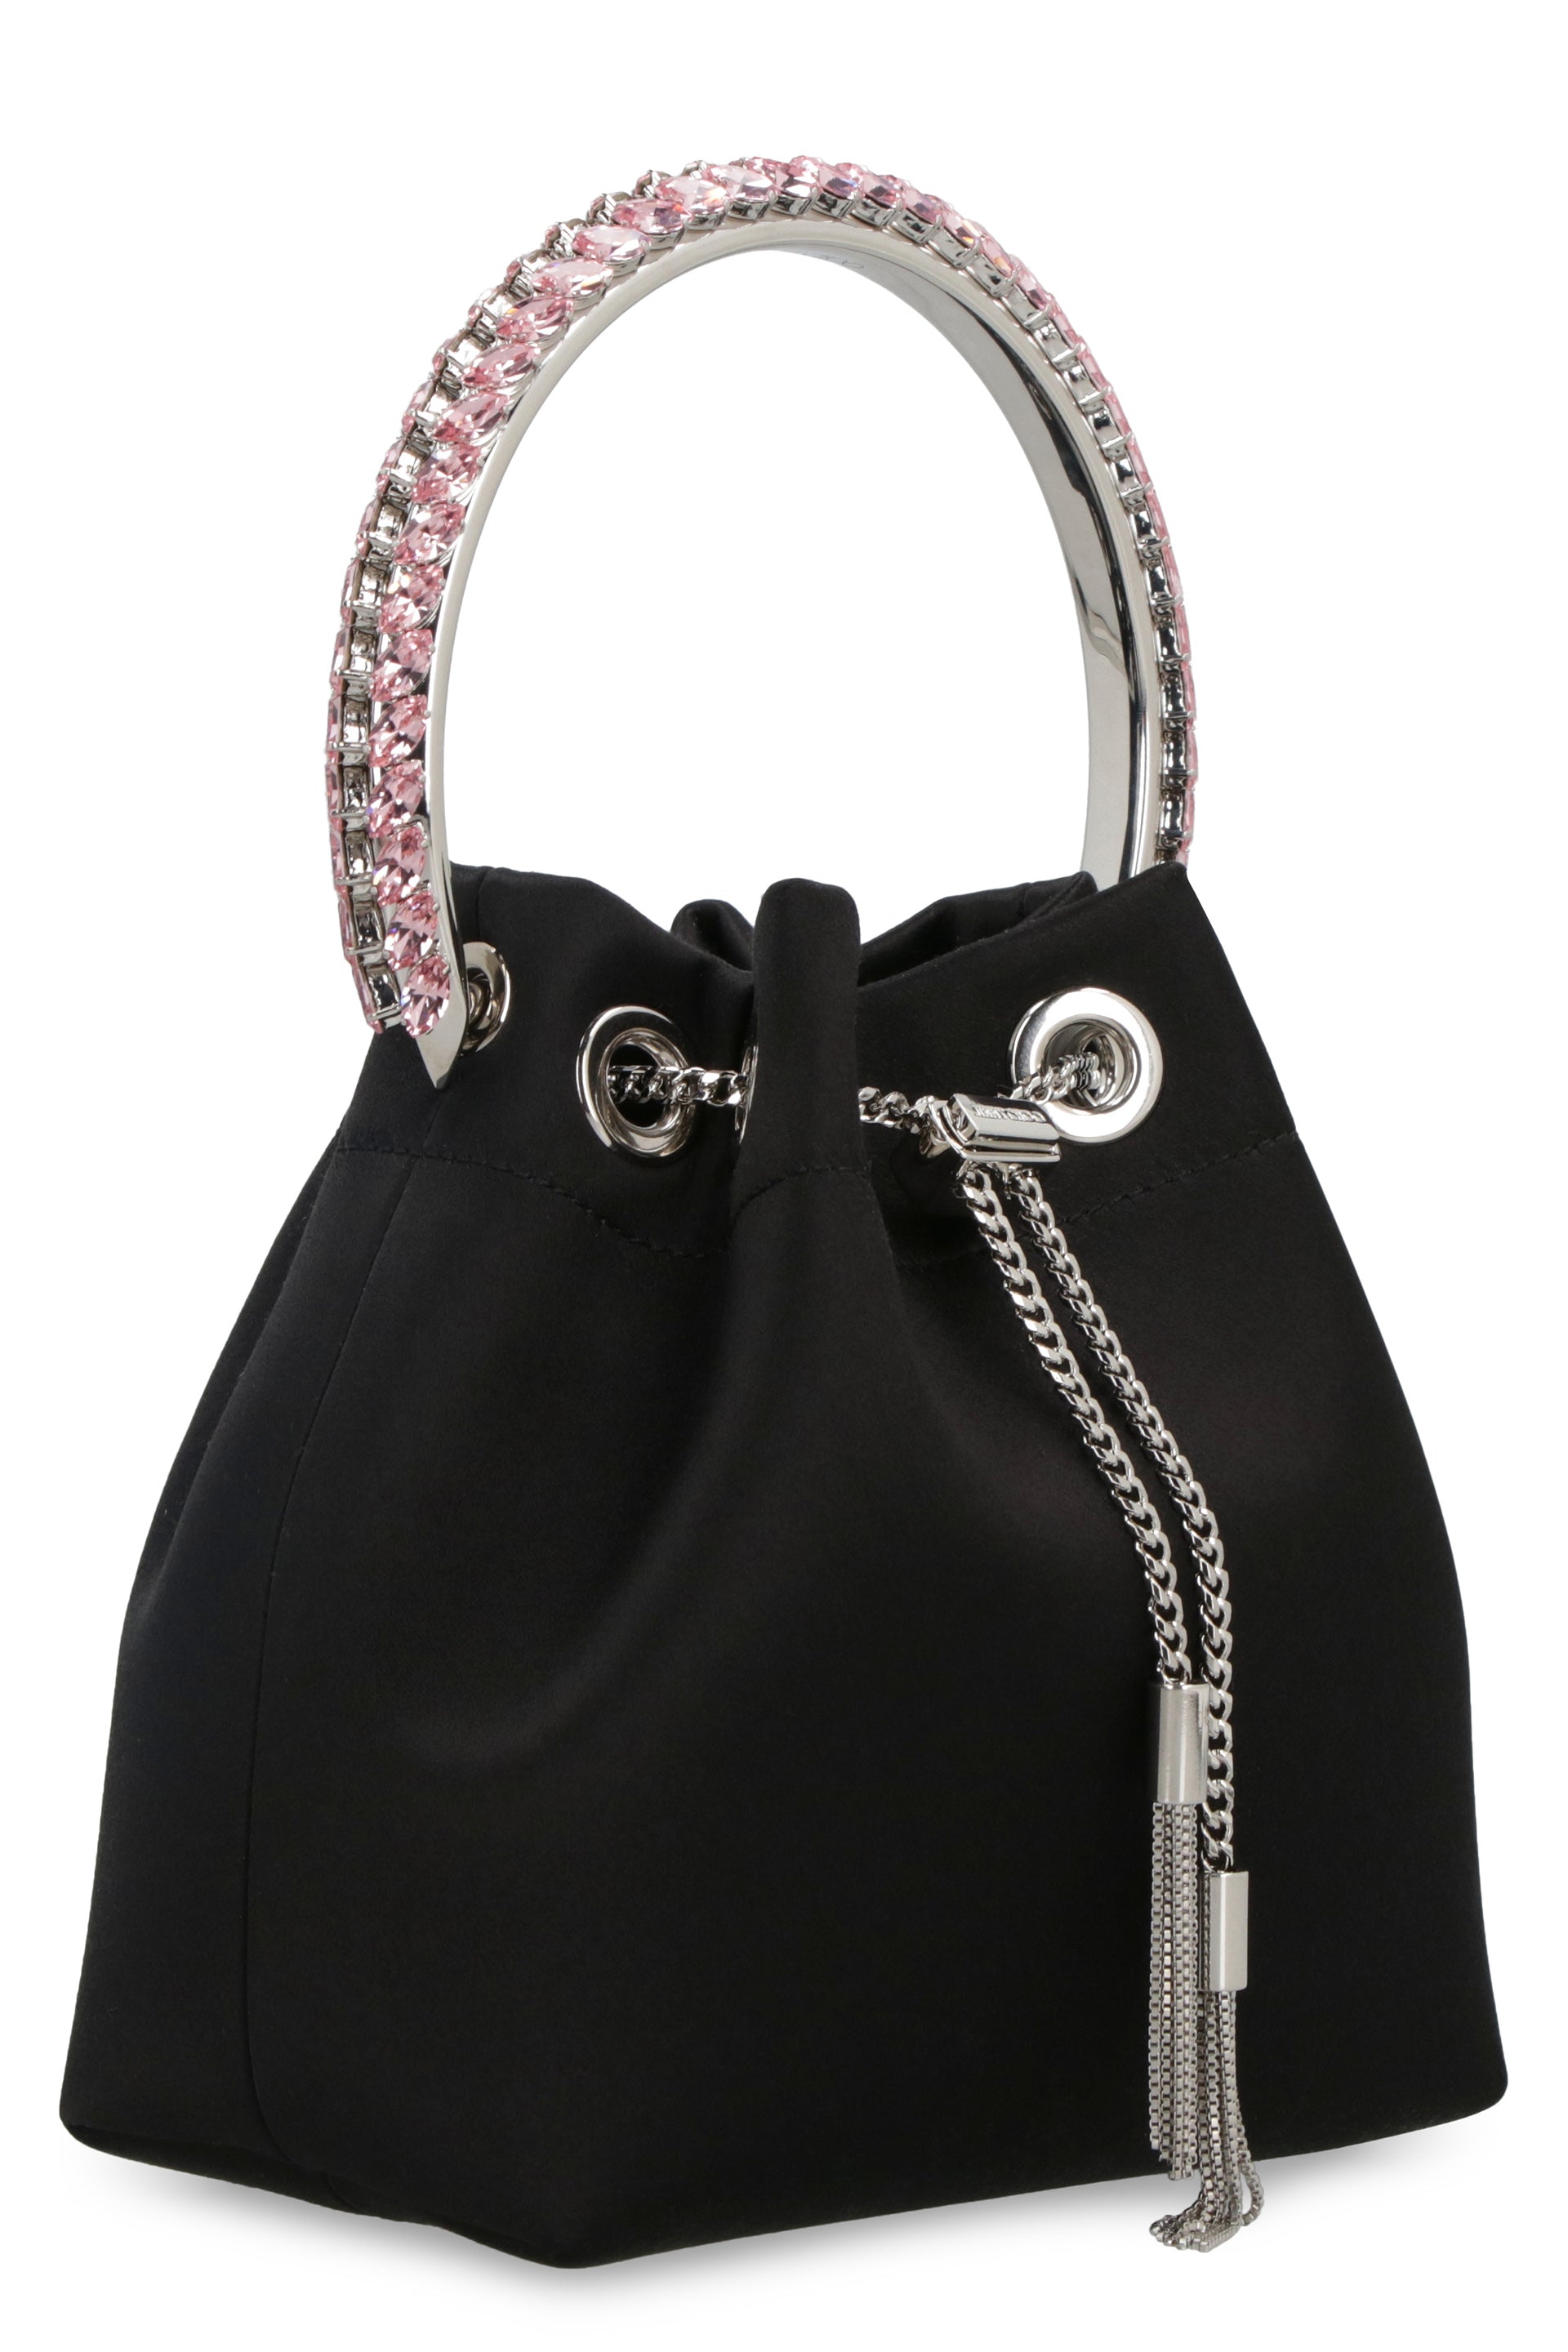 Shop Jimmy Choo Black Crystal Bucket Bag For Women